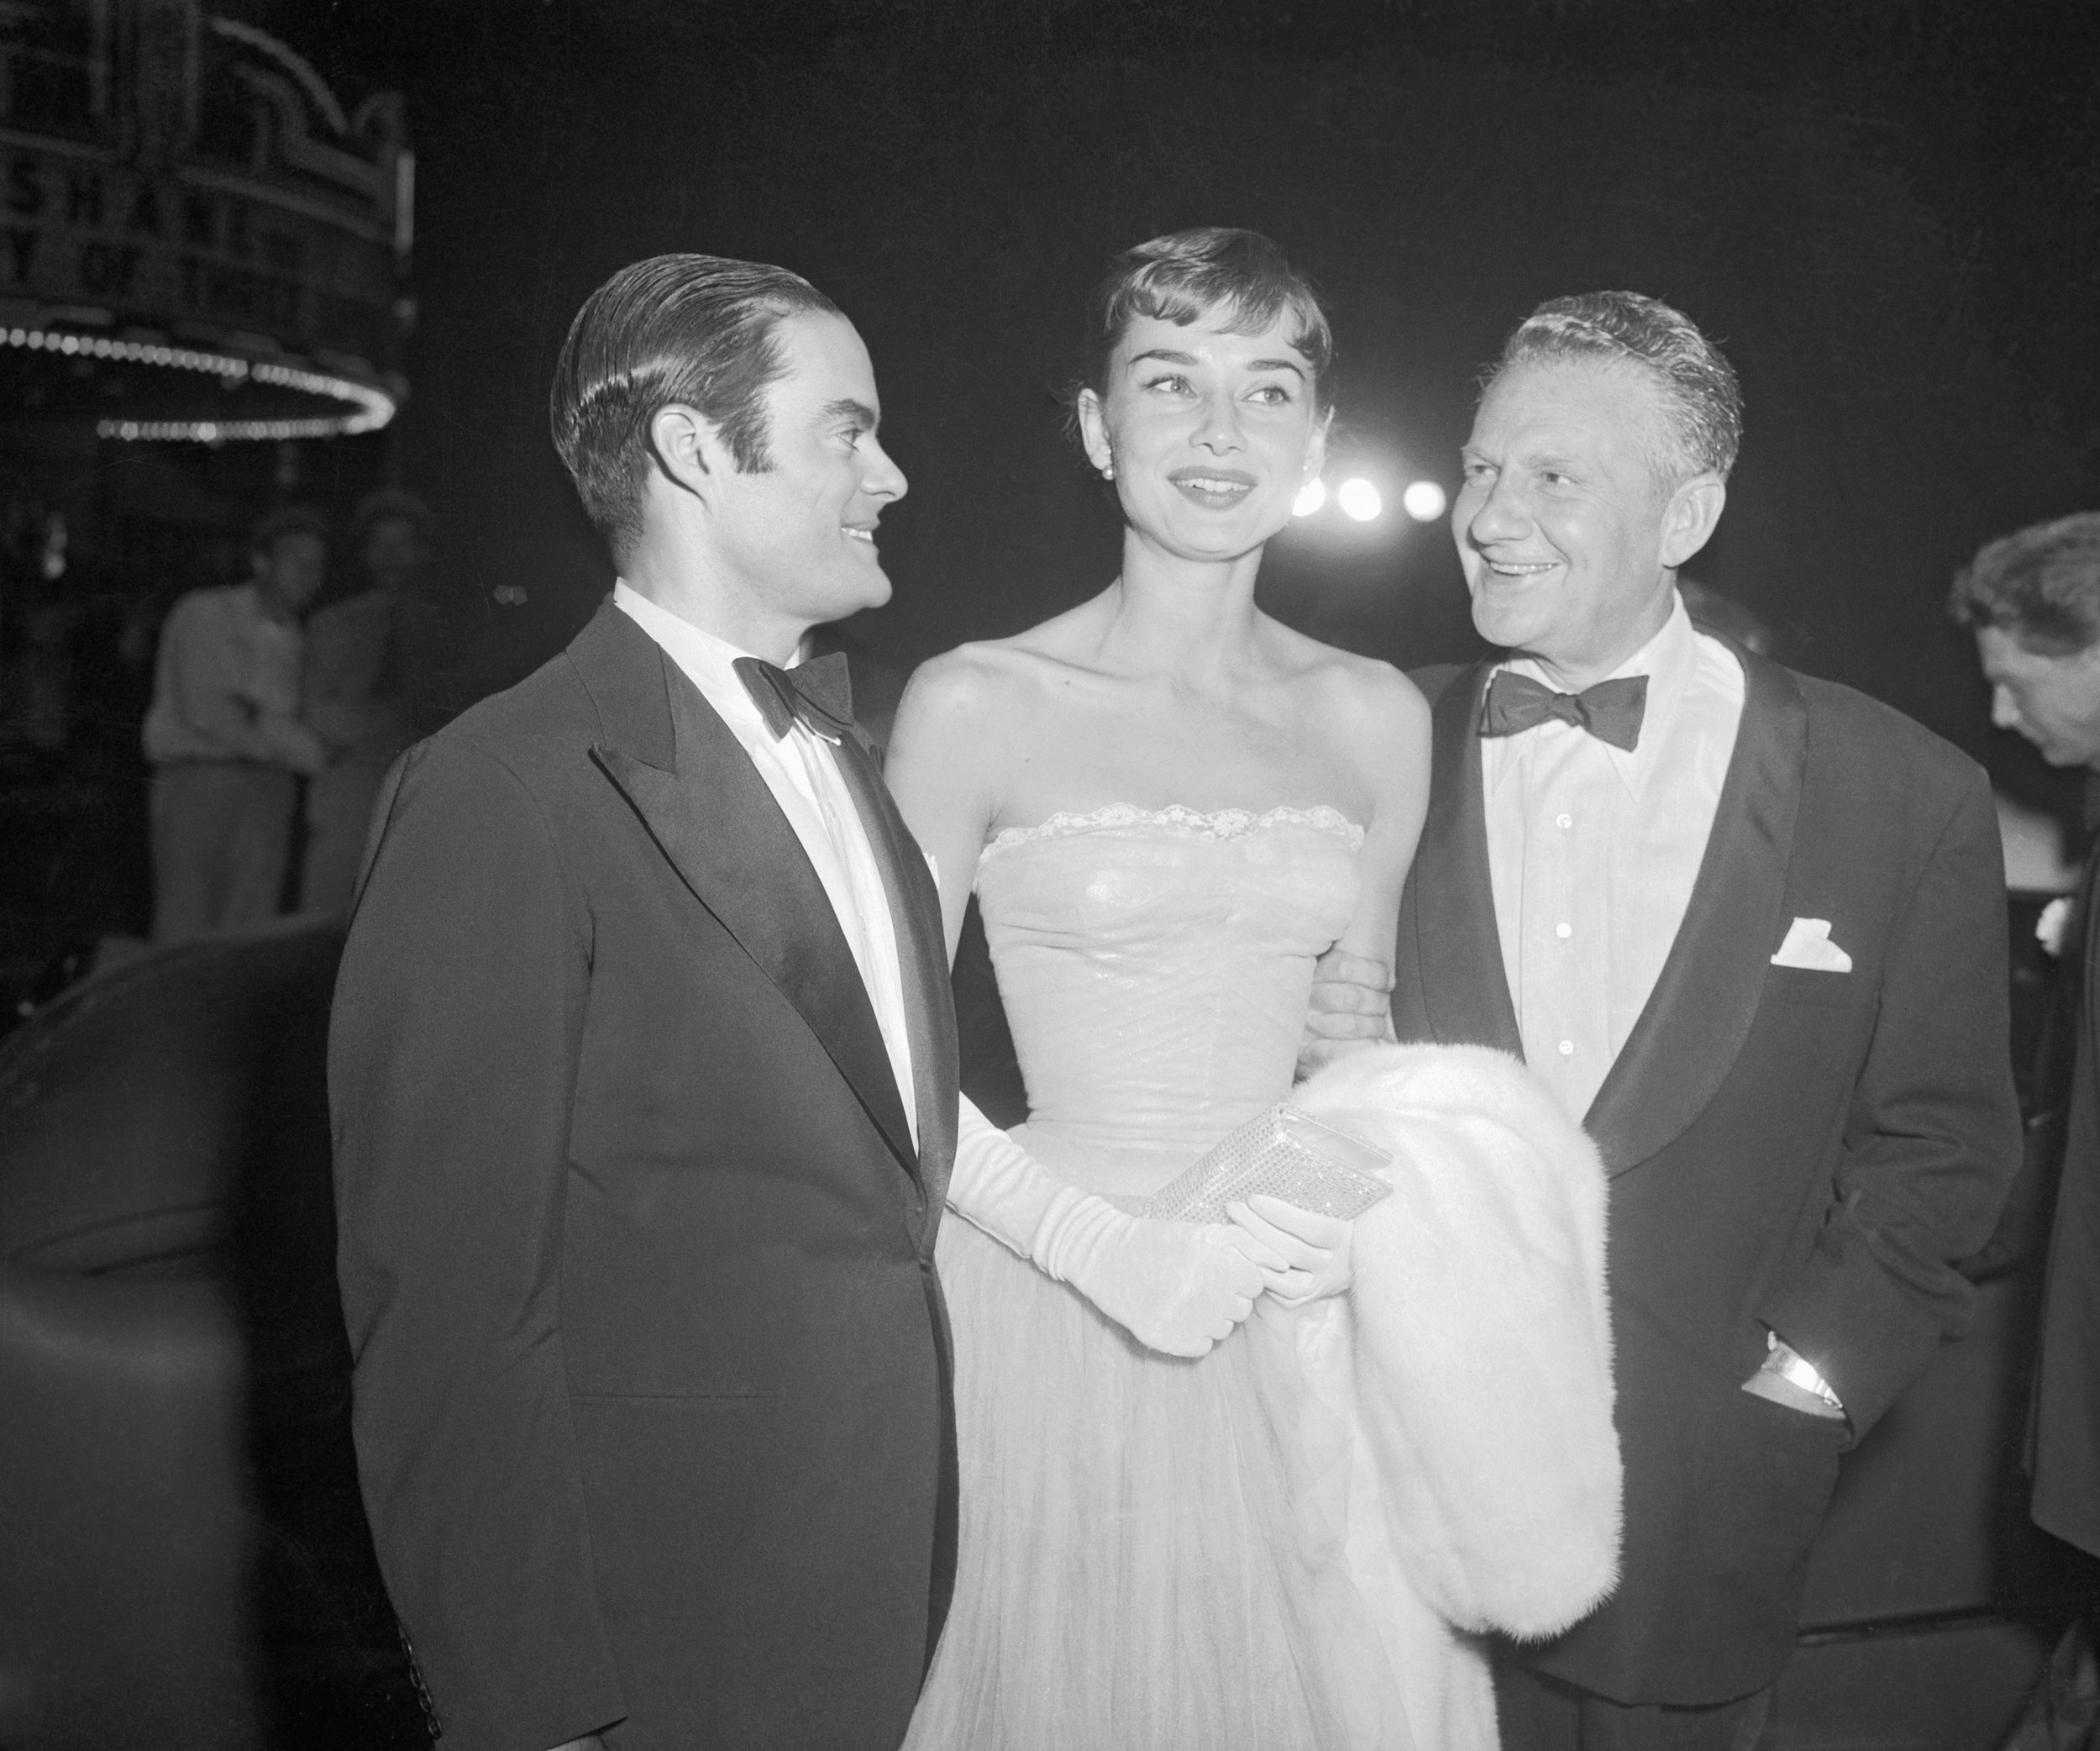 Jerry with Audrey Hepburn   [Photo Composite]